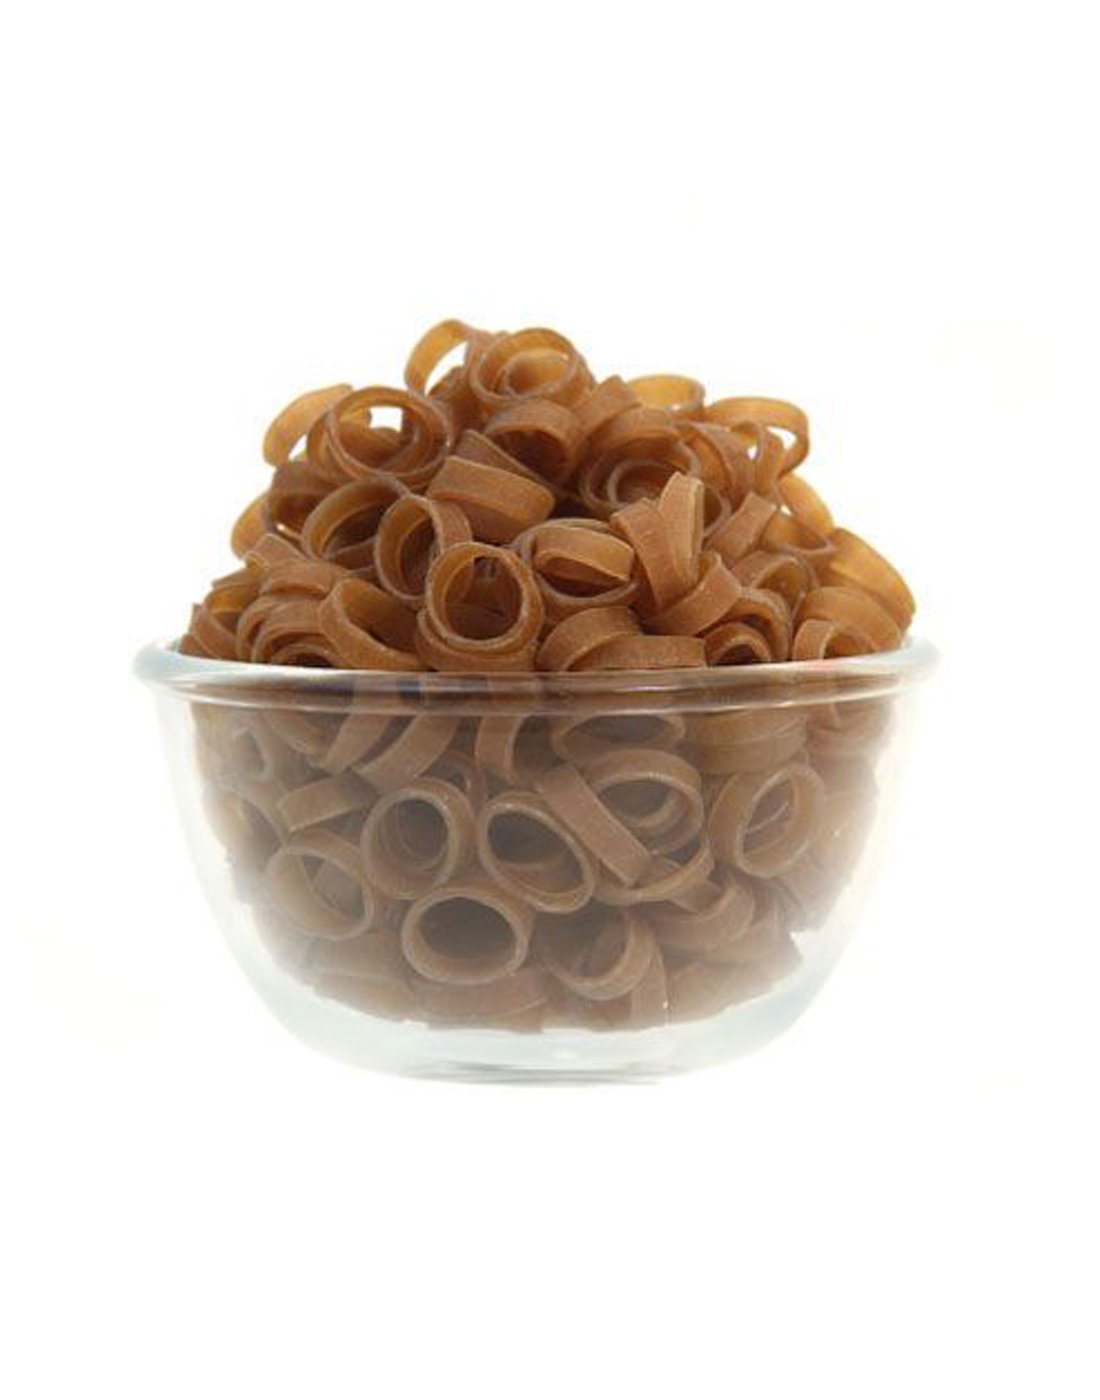 rings Fryums snack & namkeen image Stock Photo | Adobe Stock